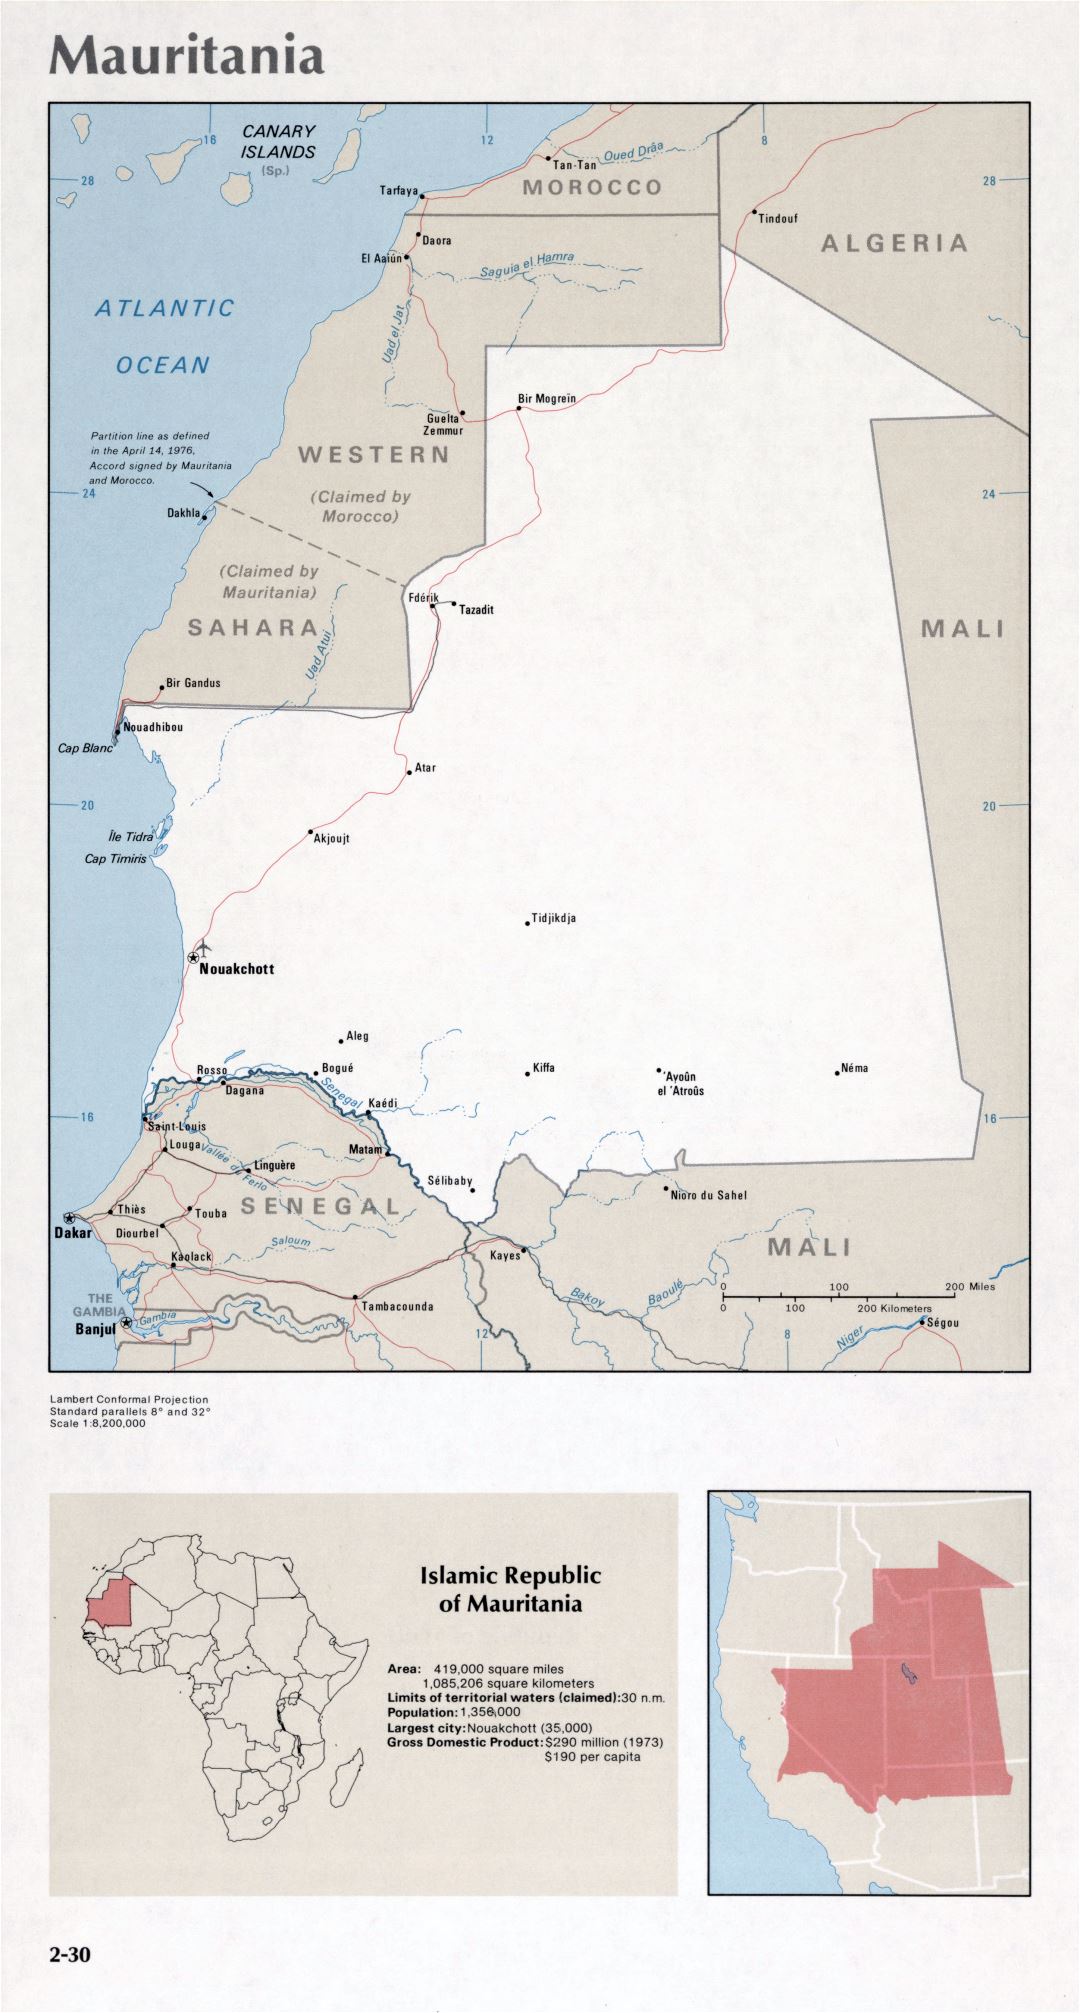 Map of Mauritania (2-30)